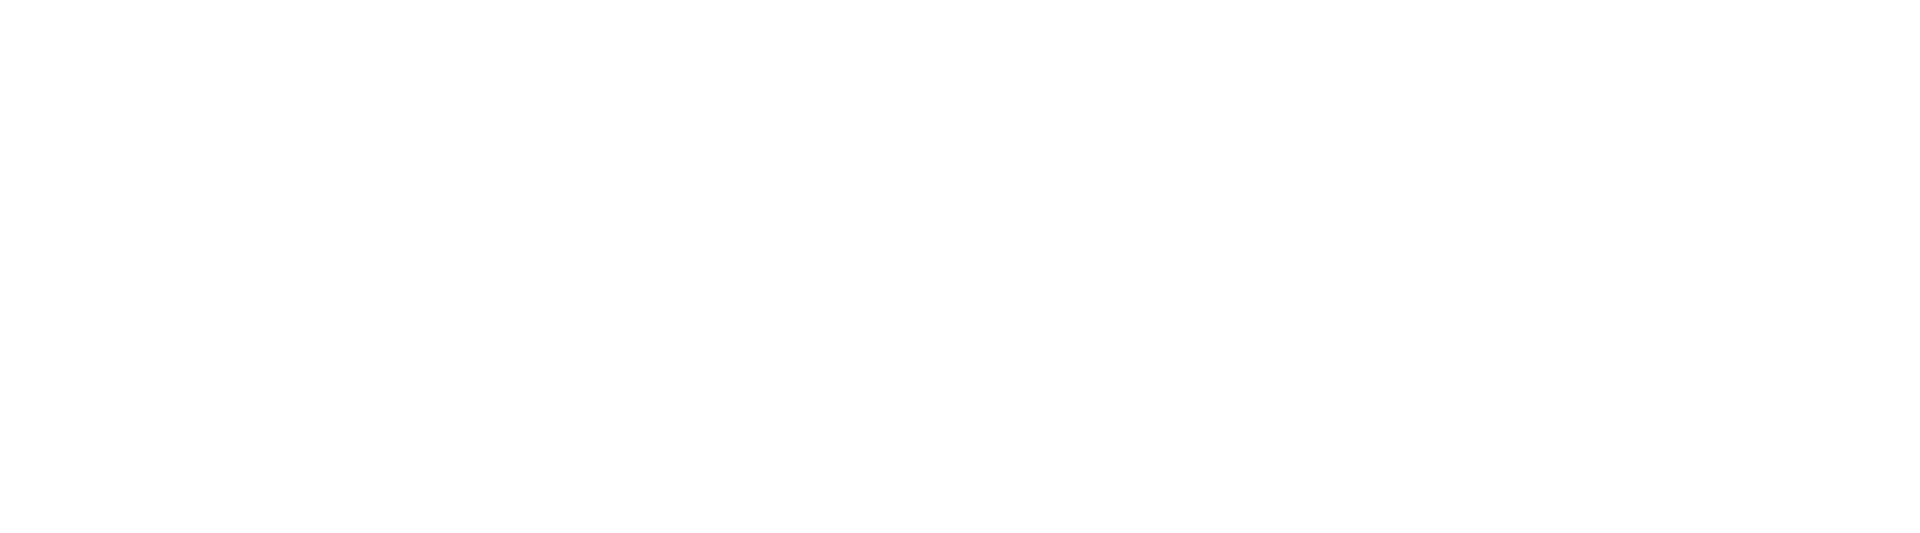 fleming mechanical logo